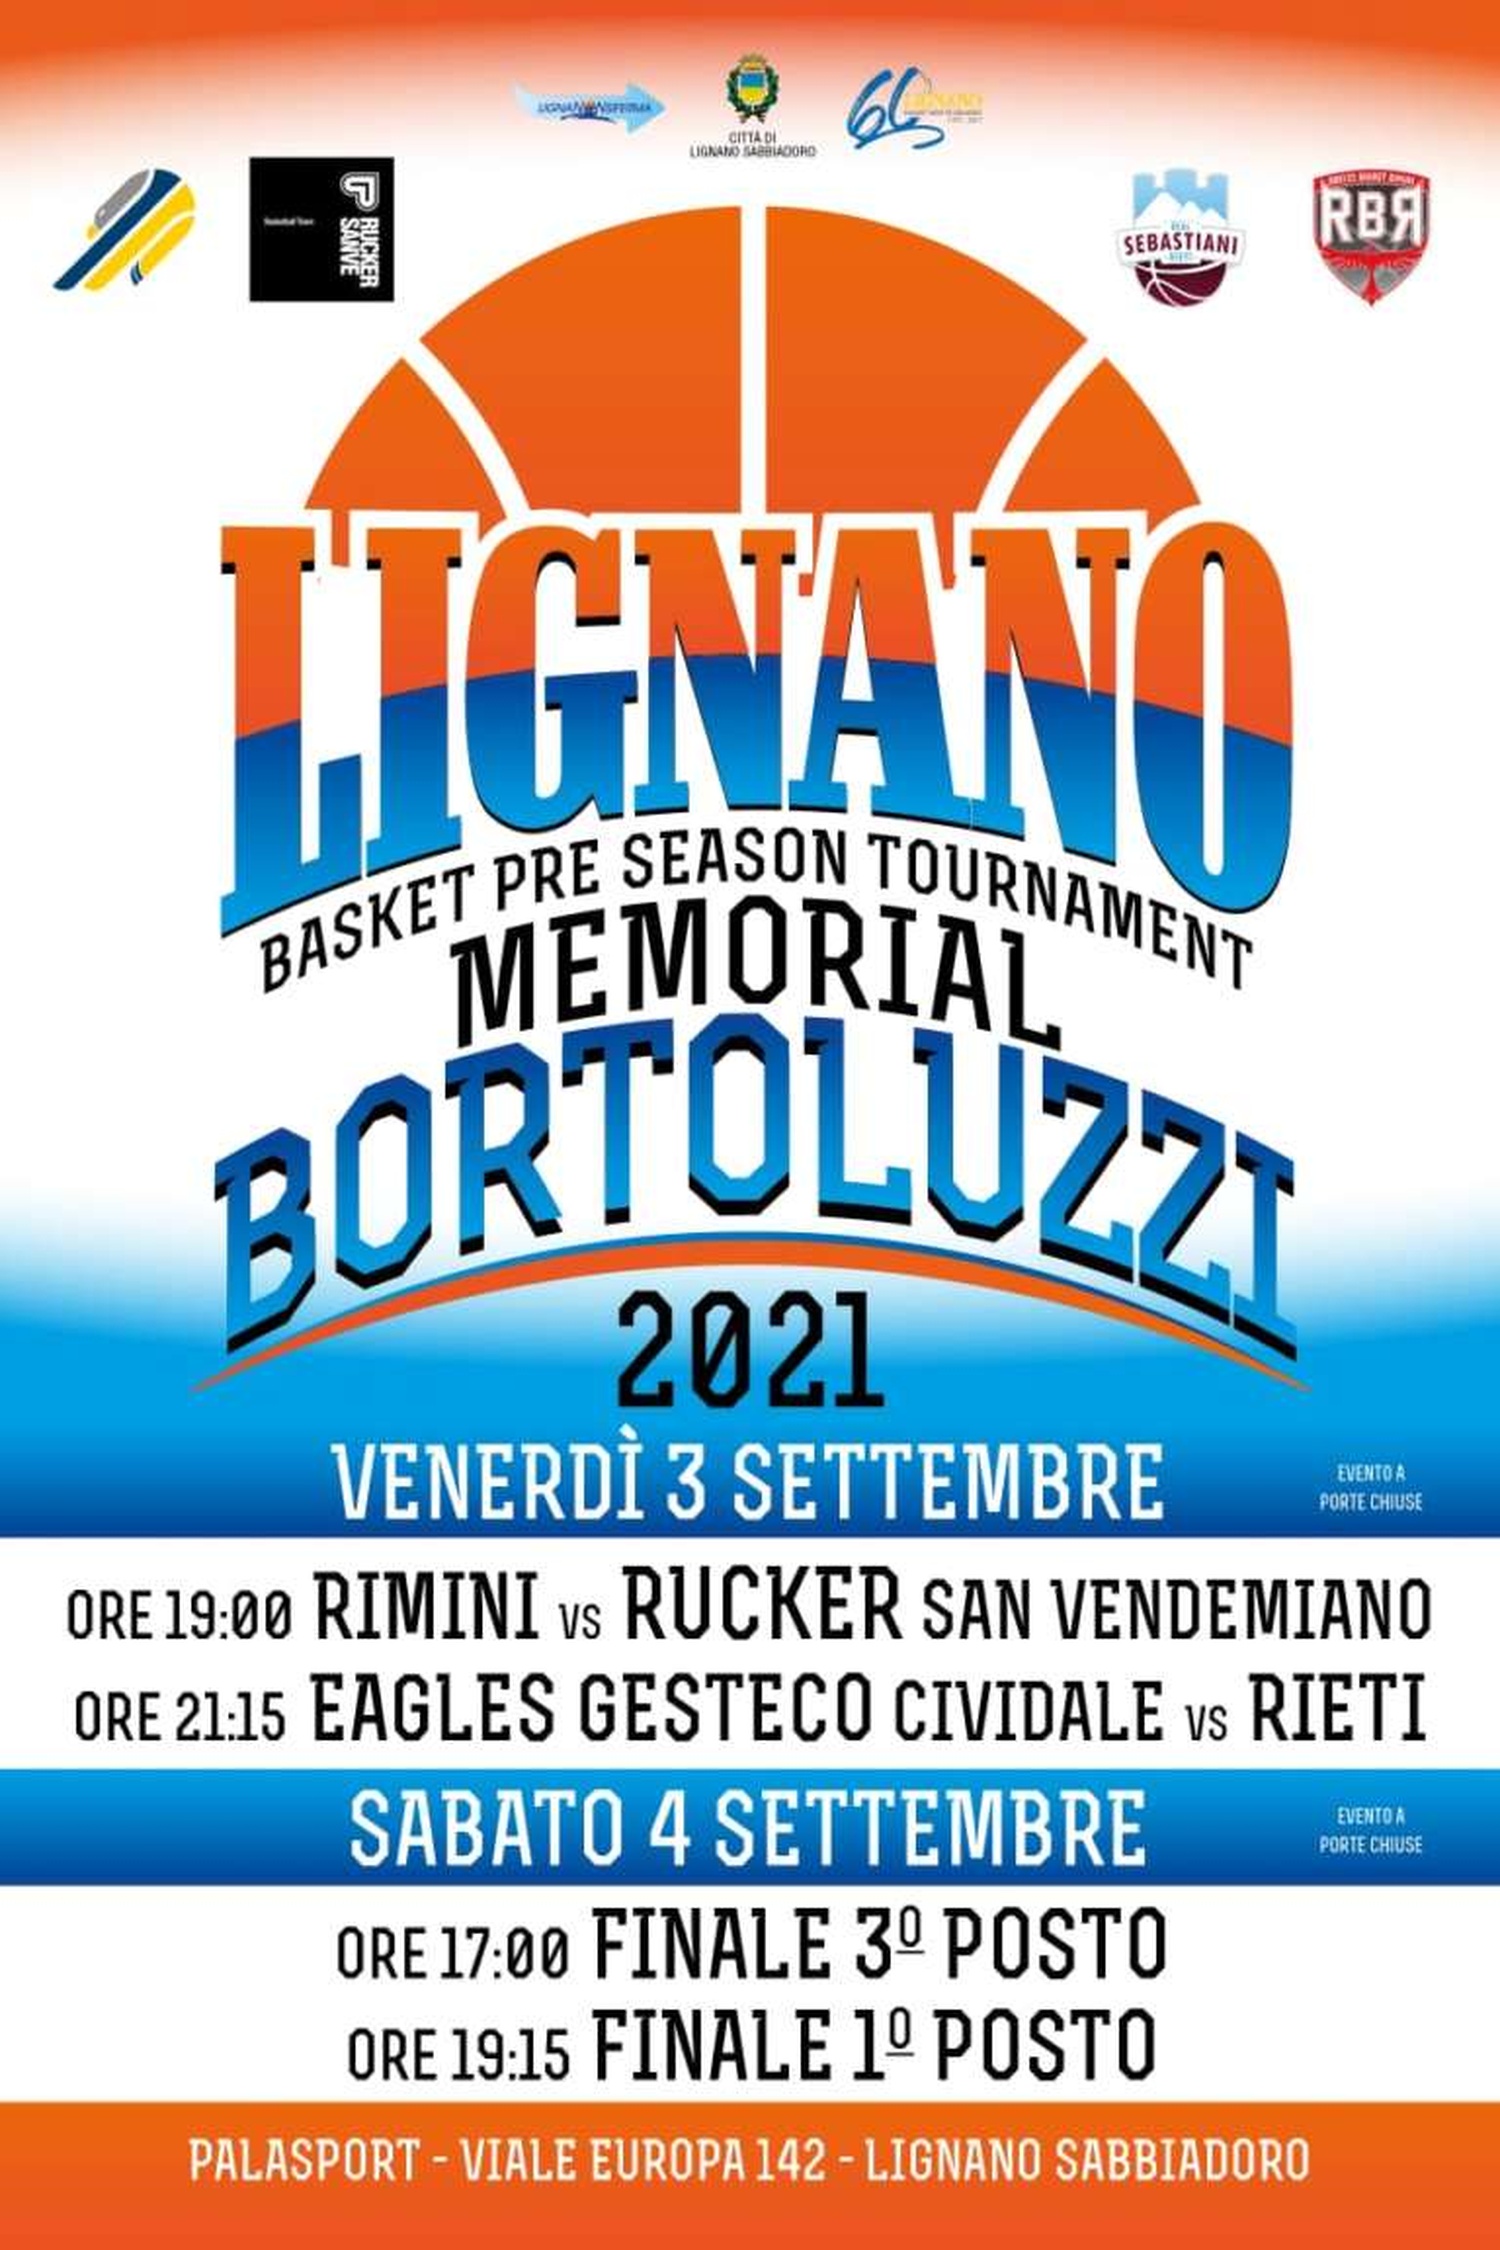 Picture ofMemorial Bortoluzzi - Basket pro season tournament